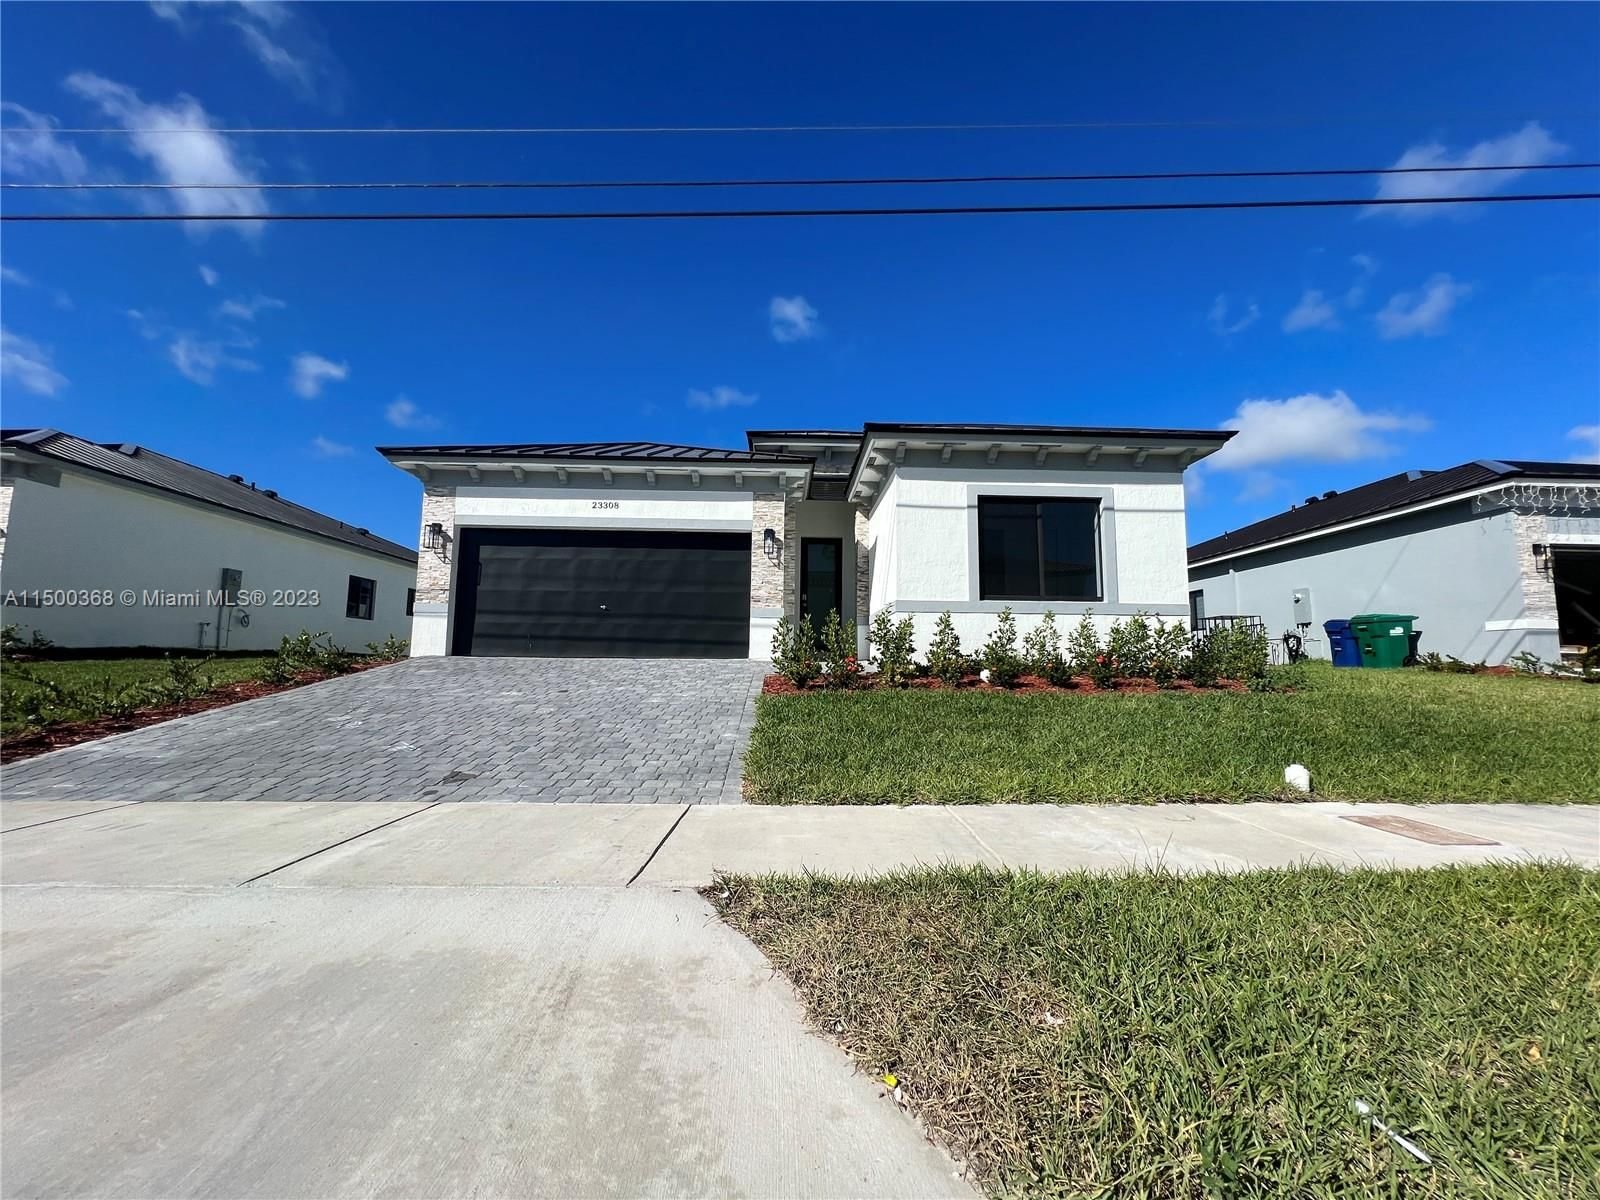 Real estate property located at 23308 119th Ave, Miami-Dade County, GP, Miami, FL